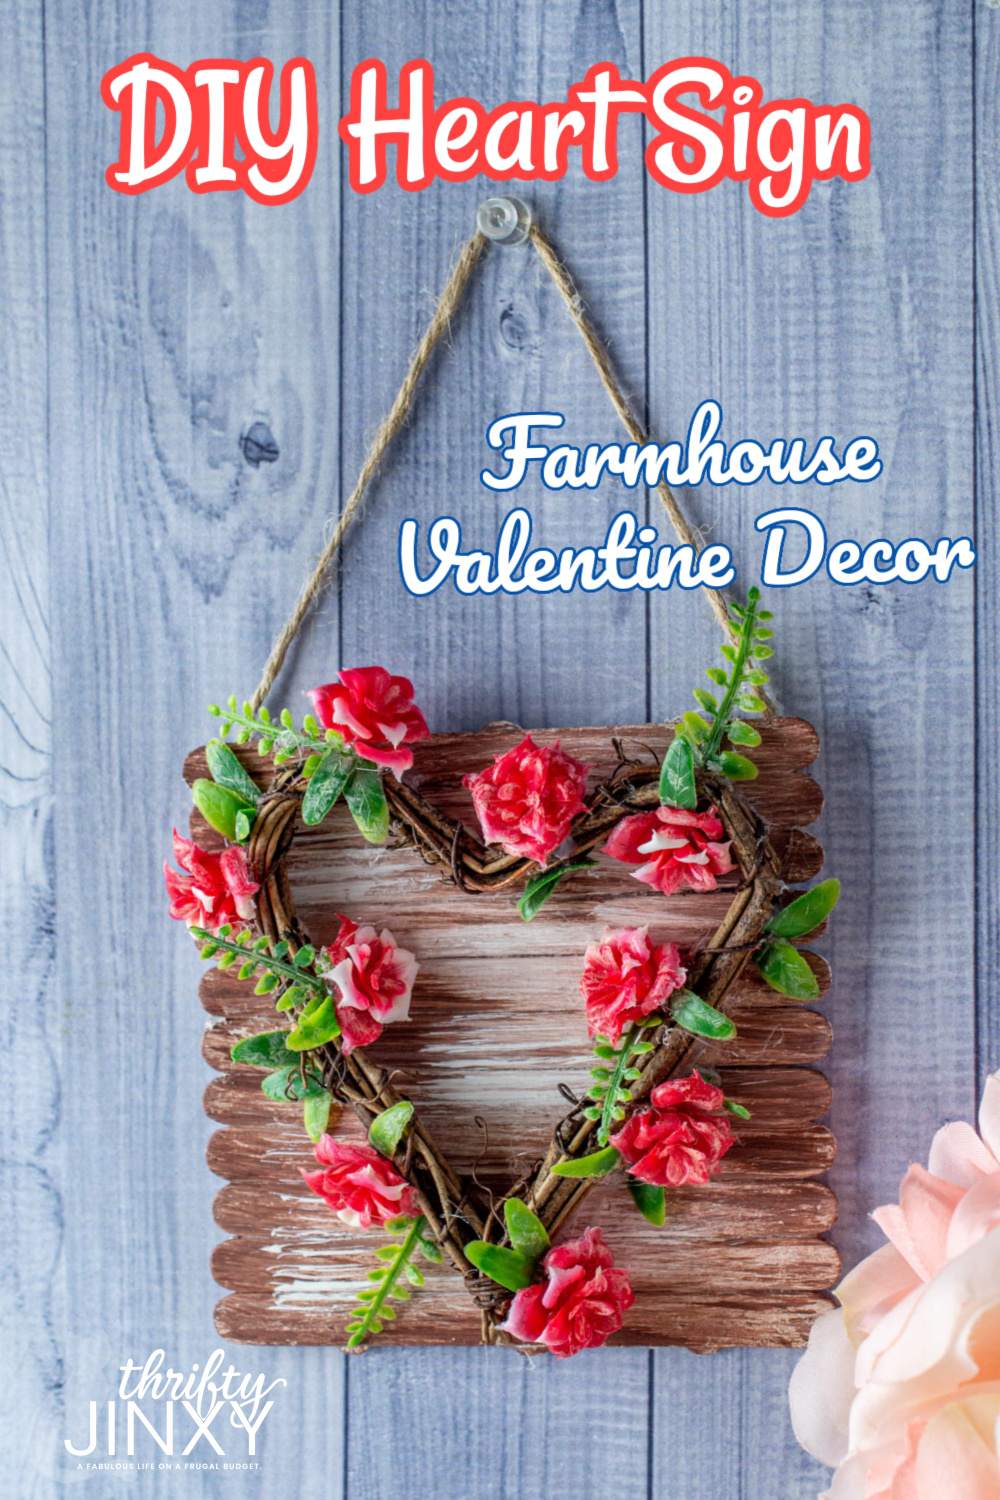 Farmhouse Valentine Decor - A Wonderful Thought